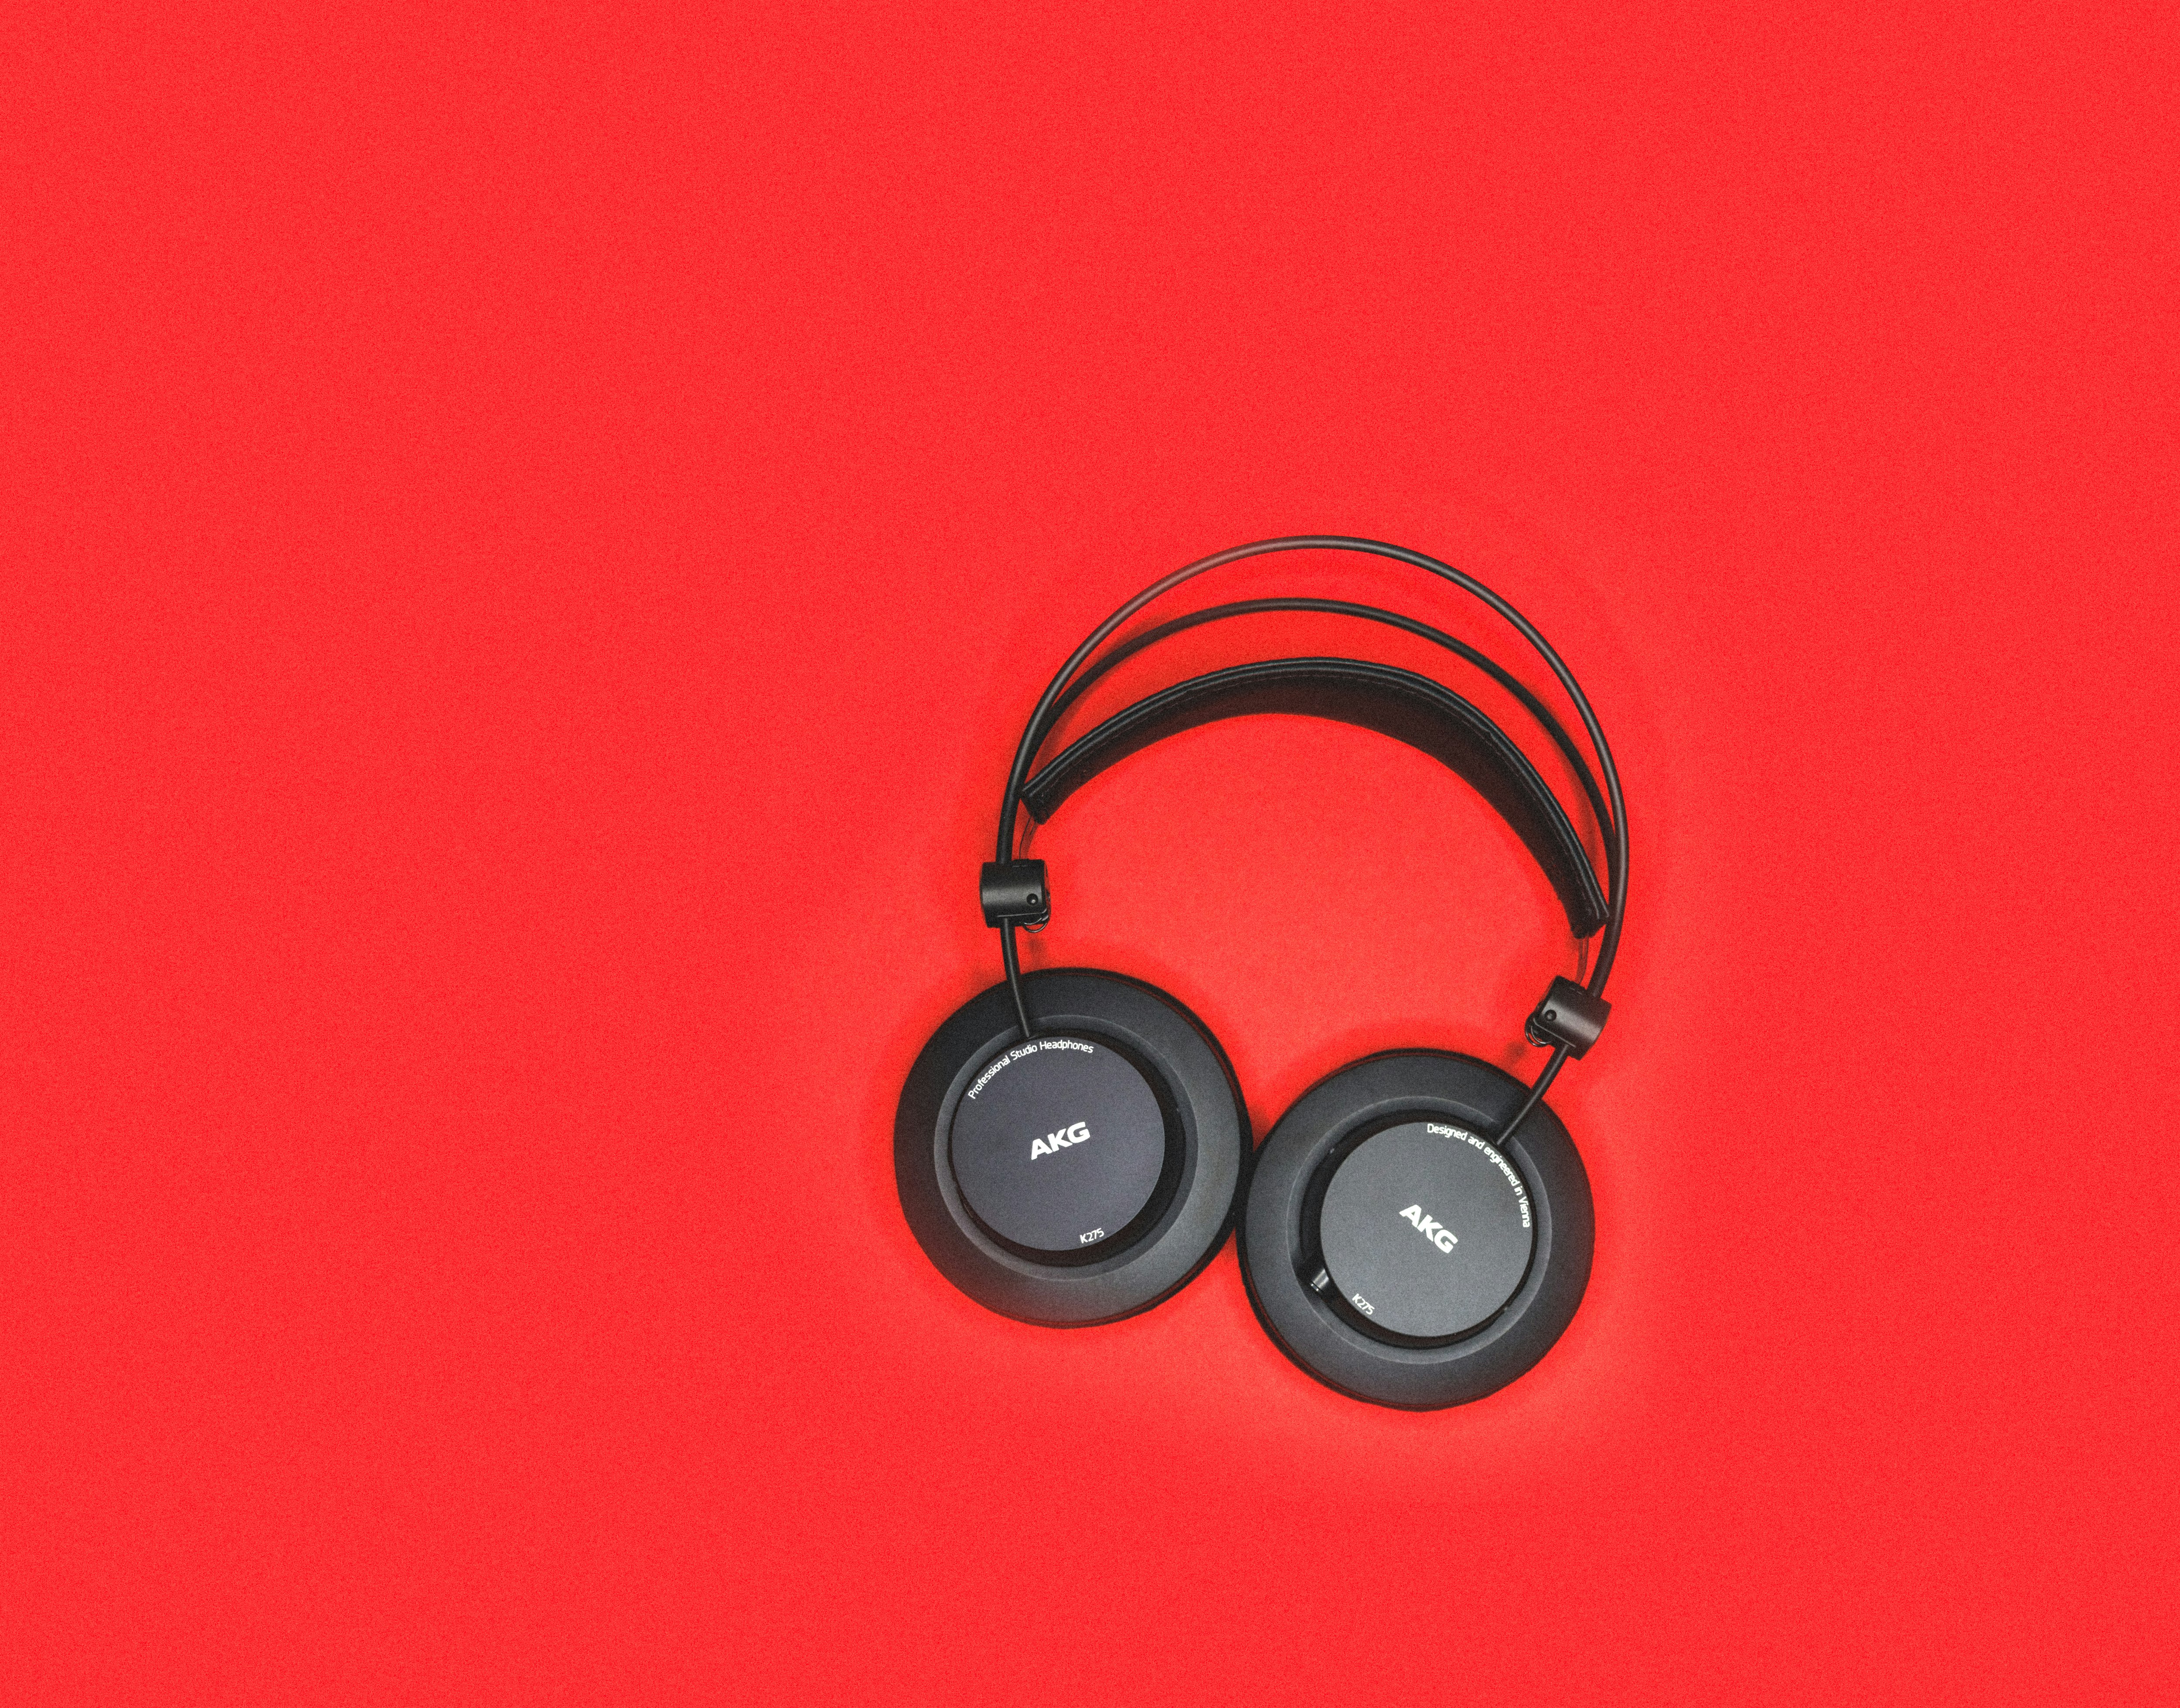 black headphones on red surface